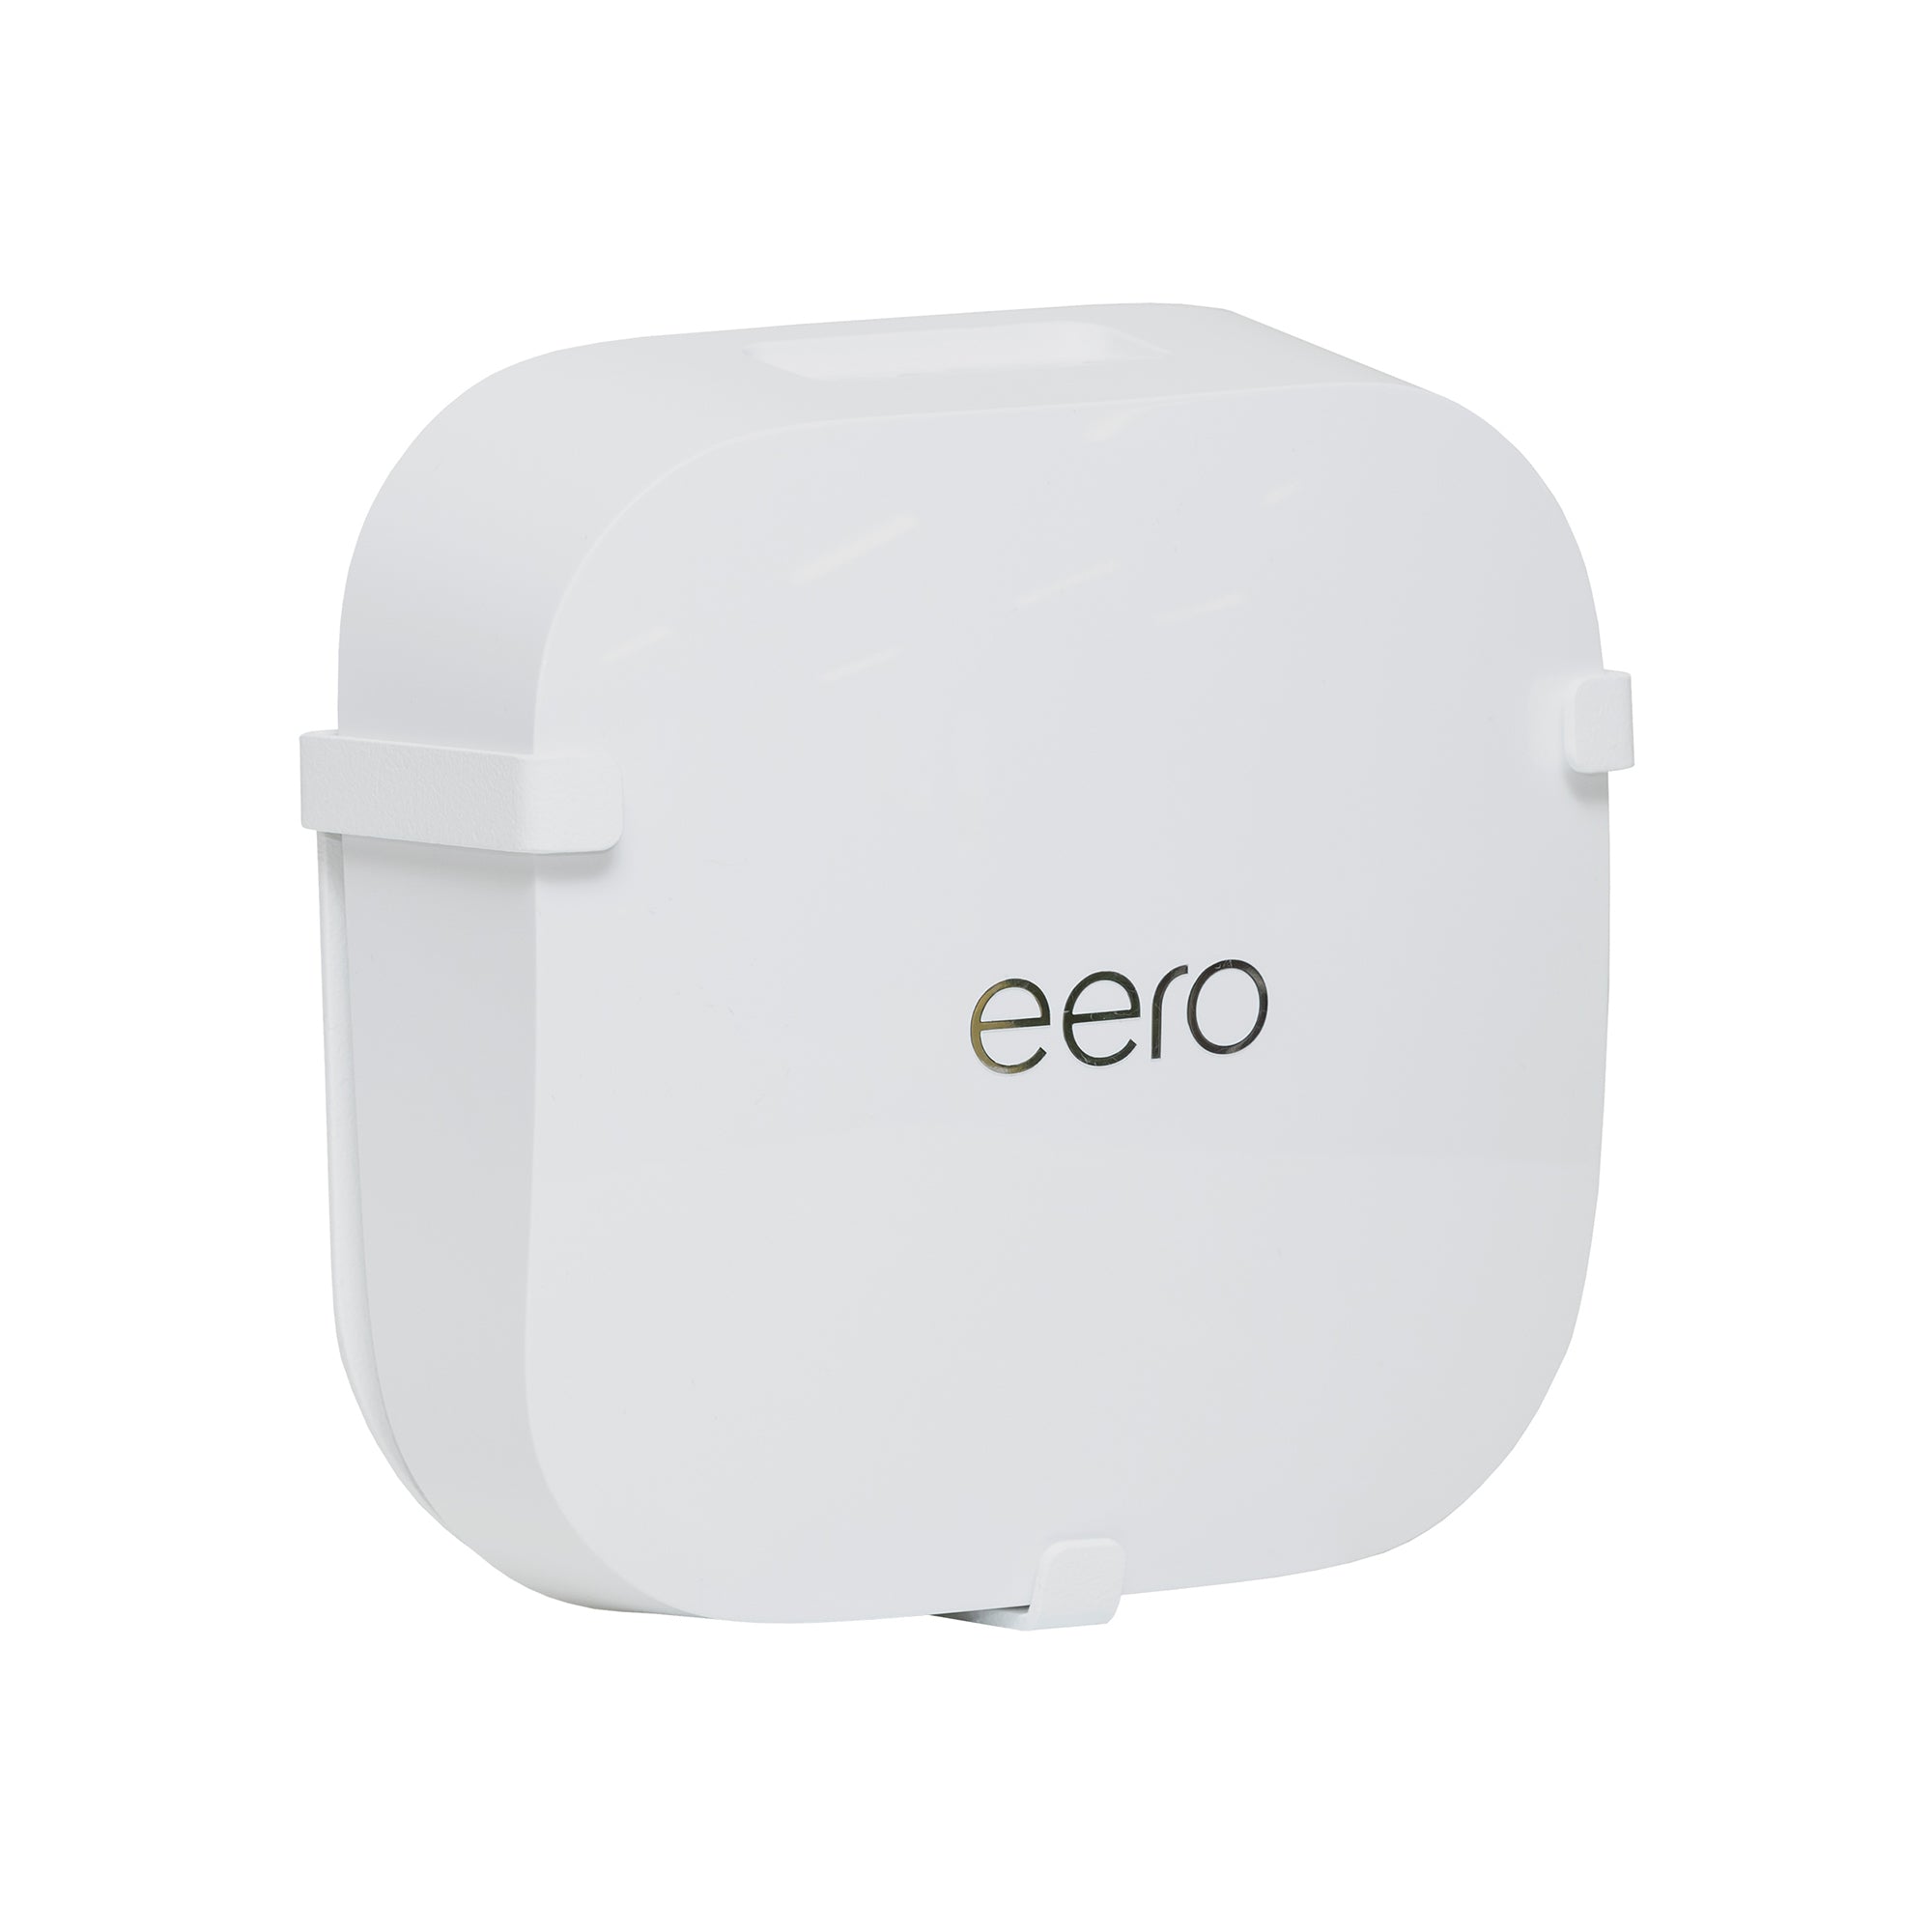 Eero Pro 6E router shown in the HIDEit EPro 6E Eero Pro 6E wall mount.